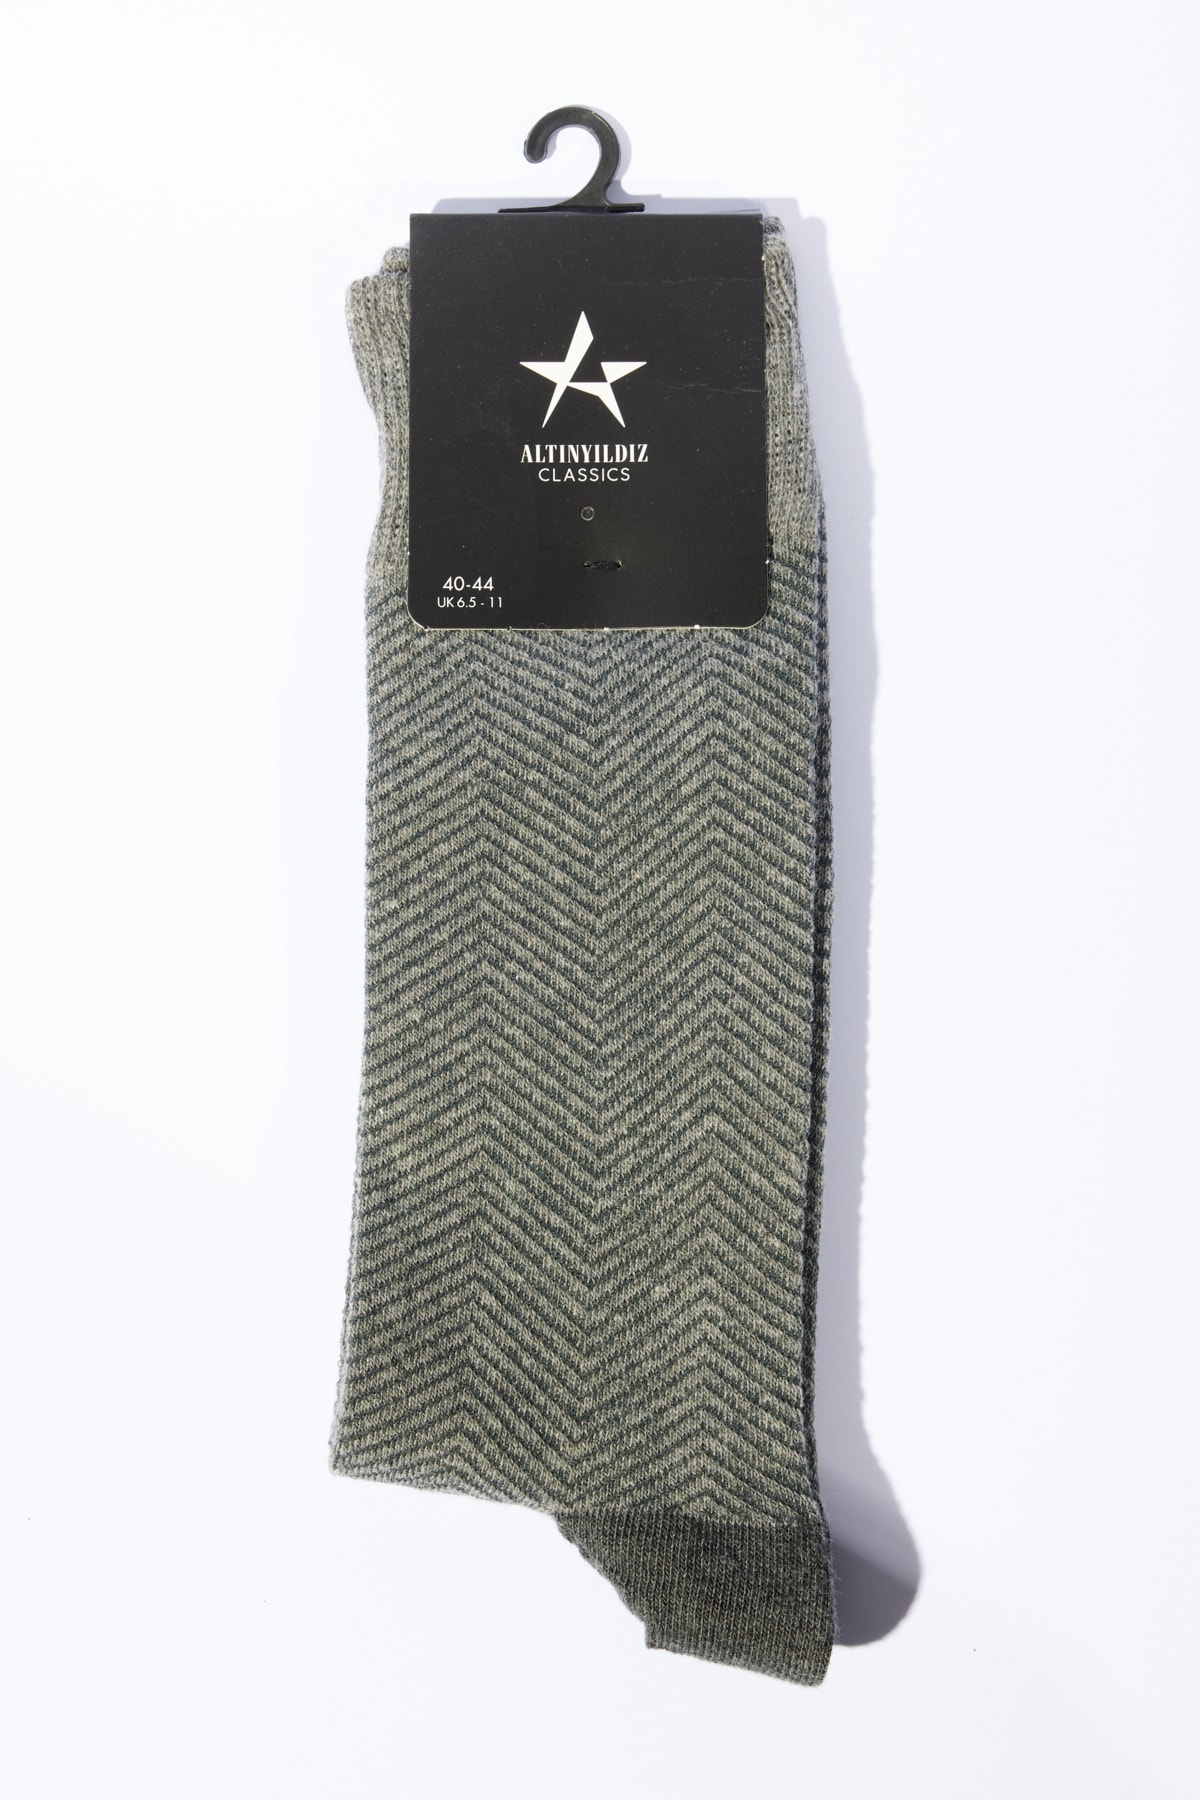 ALTINYILDIZ CLASSICS Men's Grey-Anthracite Patterned Socks